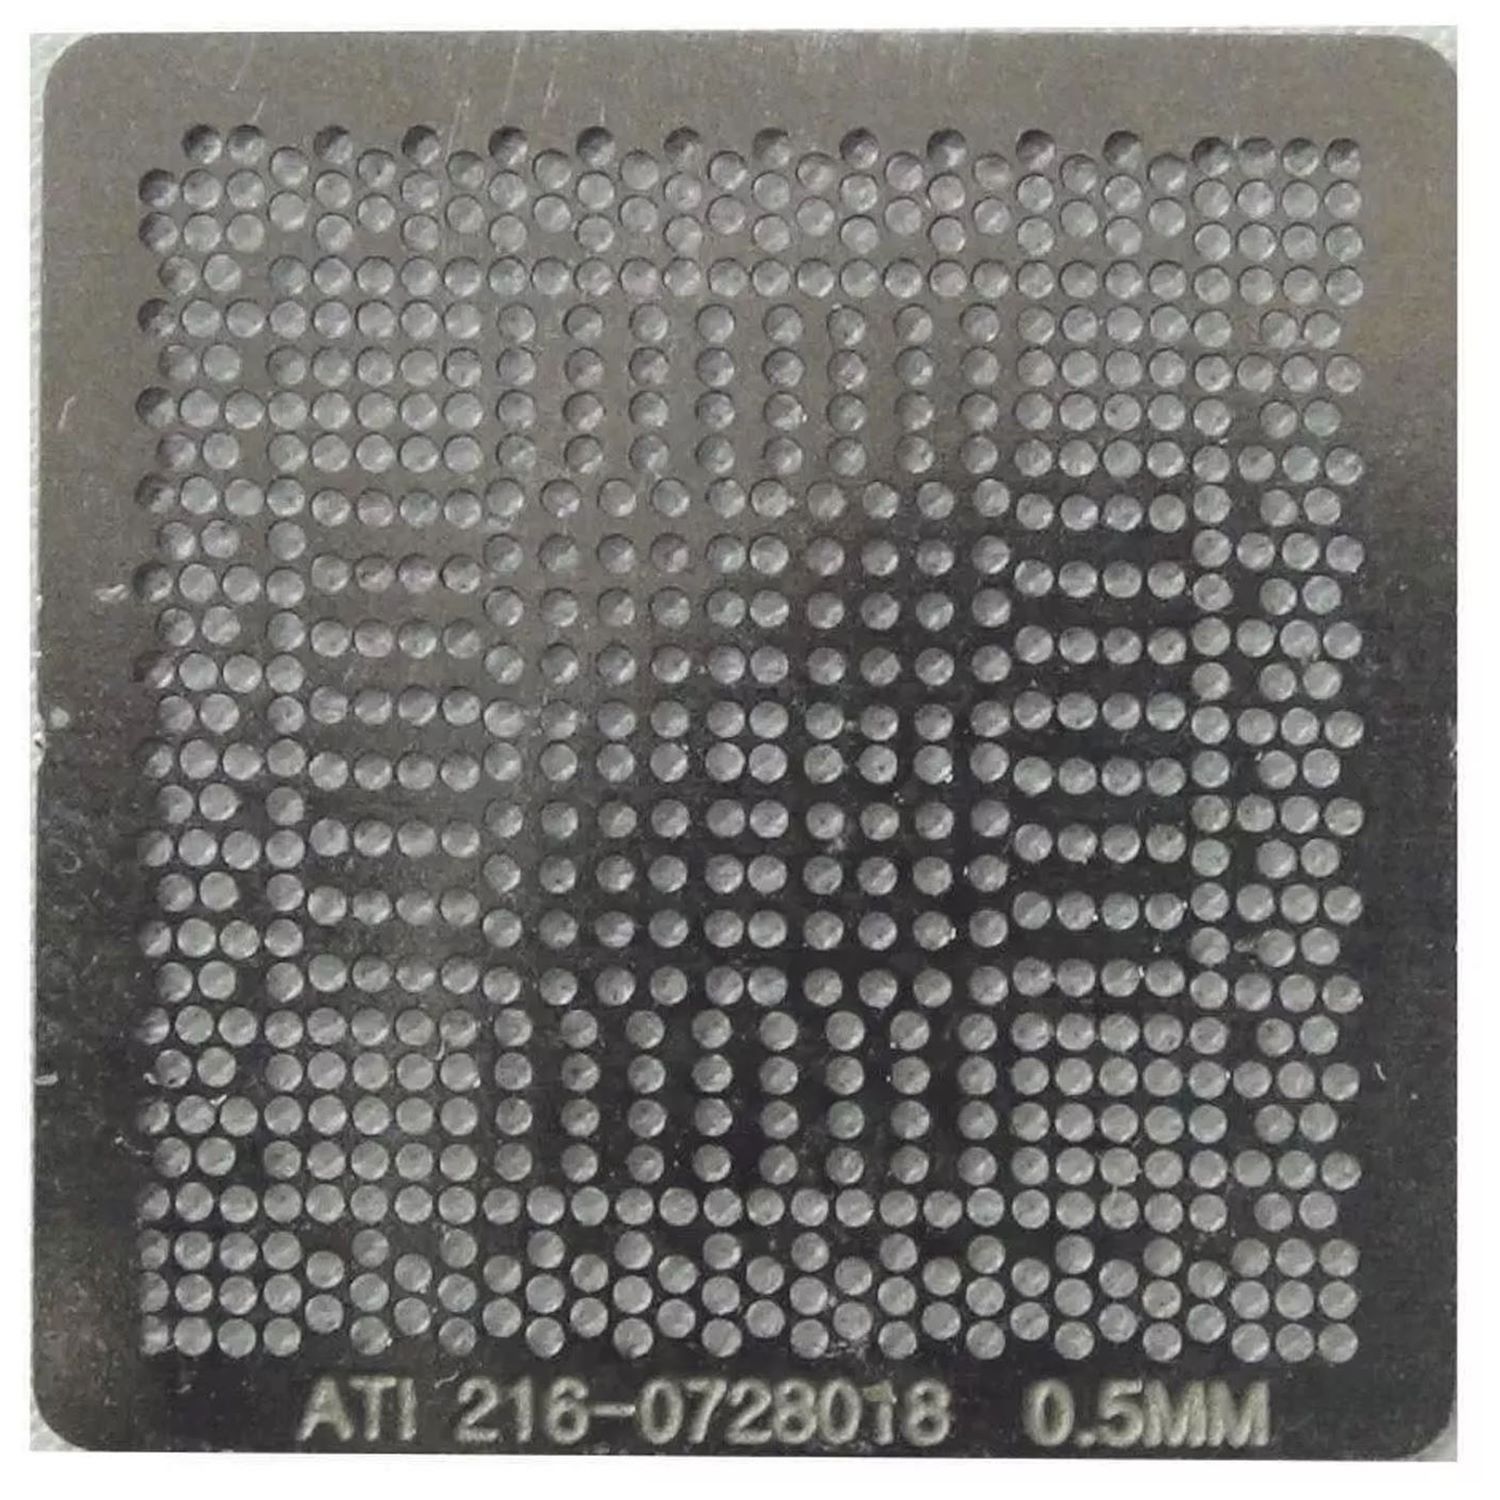 Kit stencil 216-0728018 Bga Calor Direto Reballing G22 + solda esfera 0.5mm+ suporte